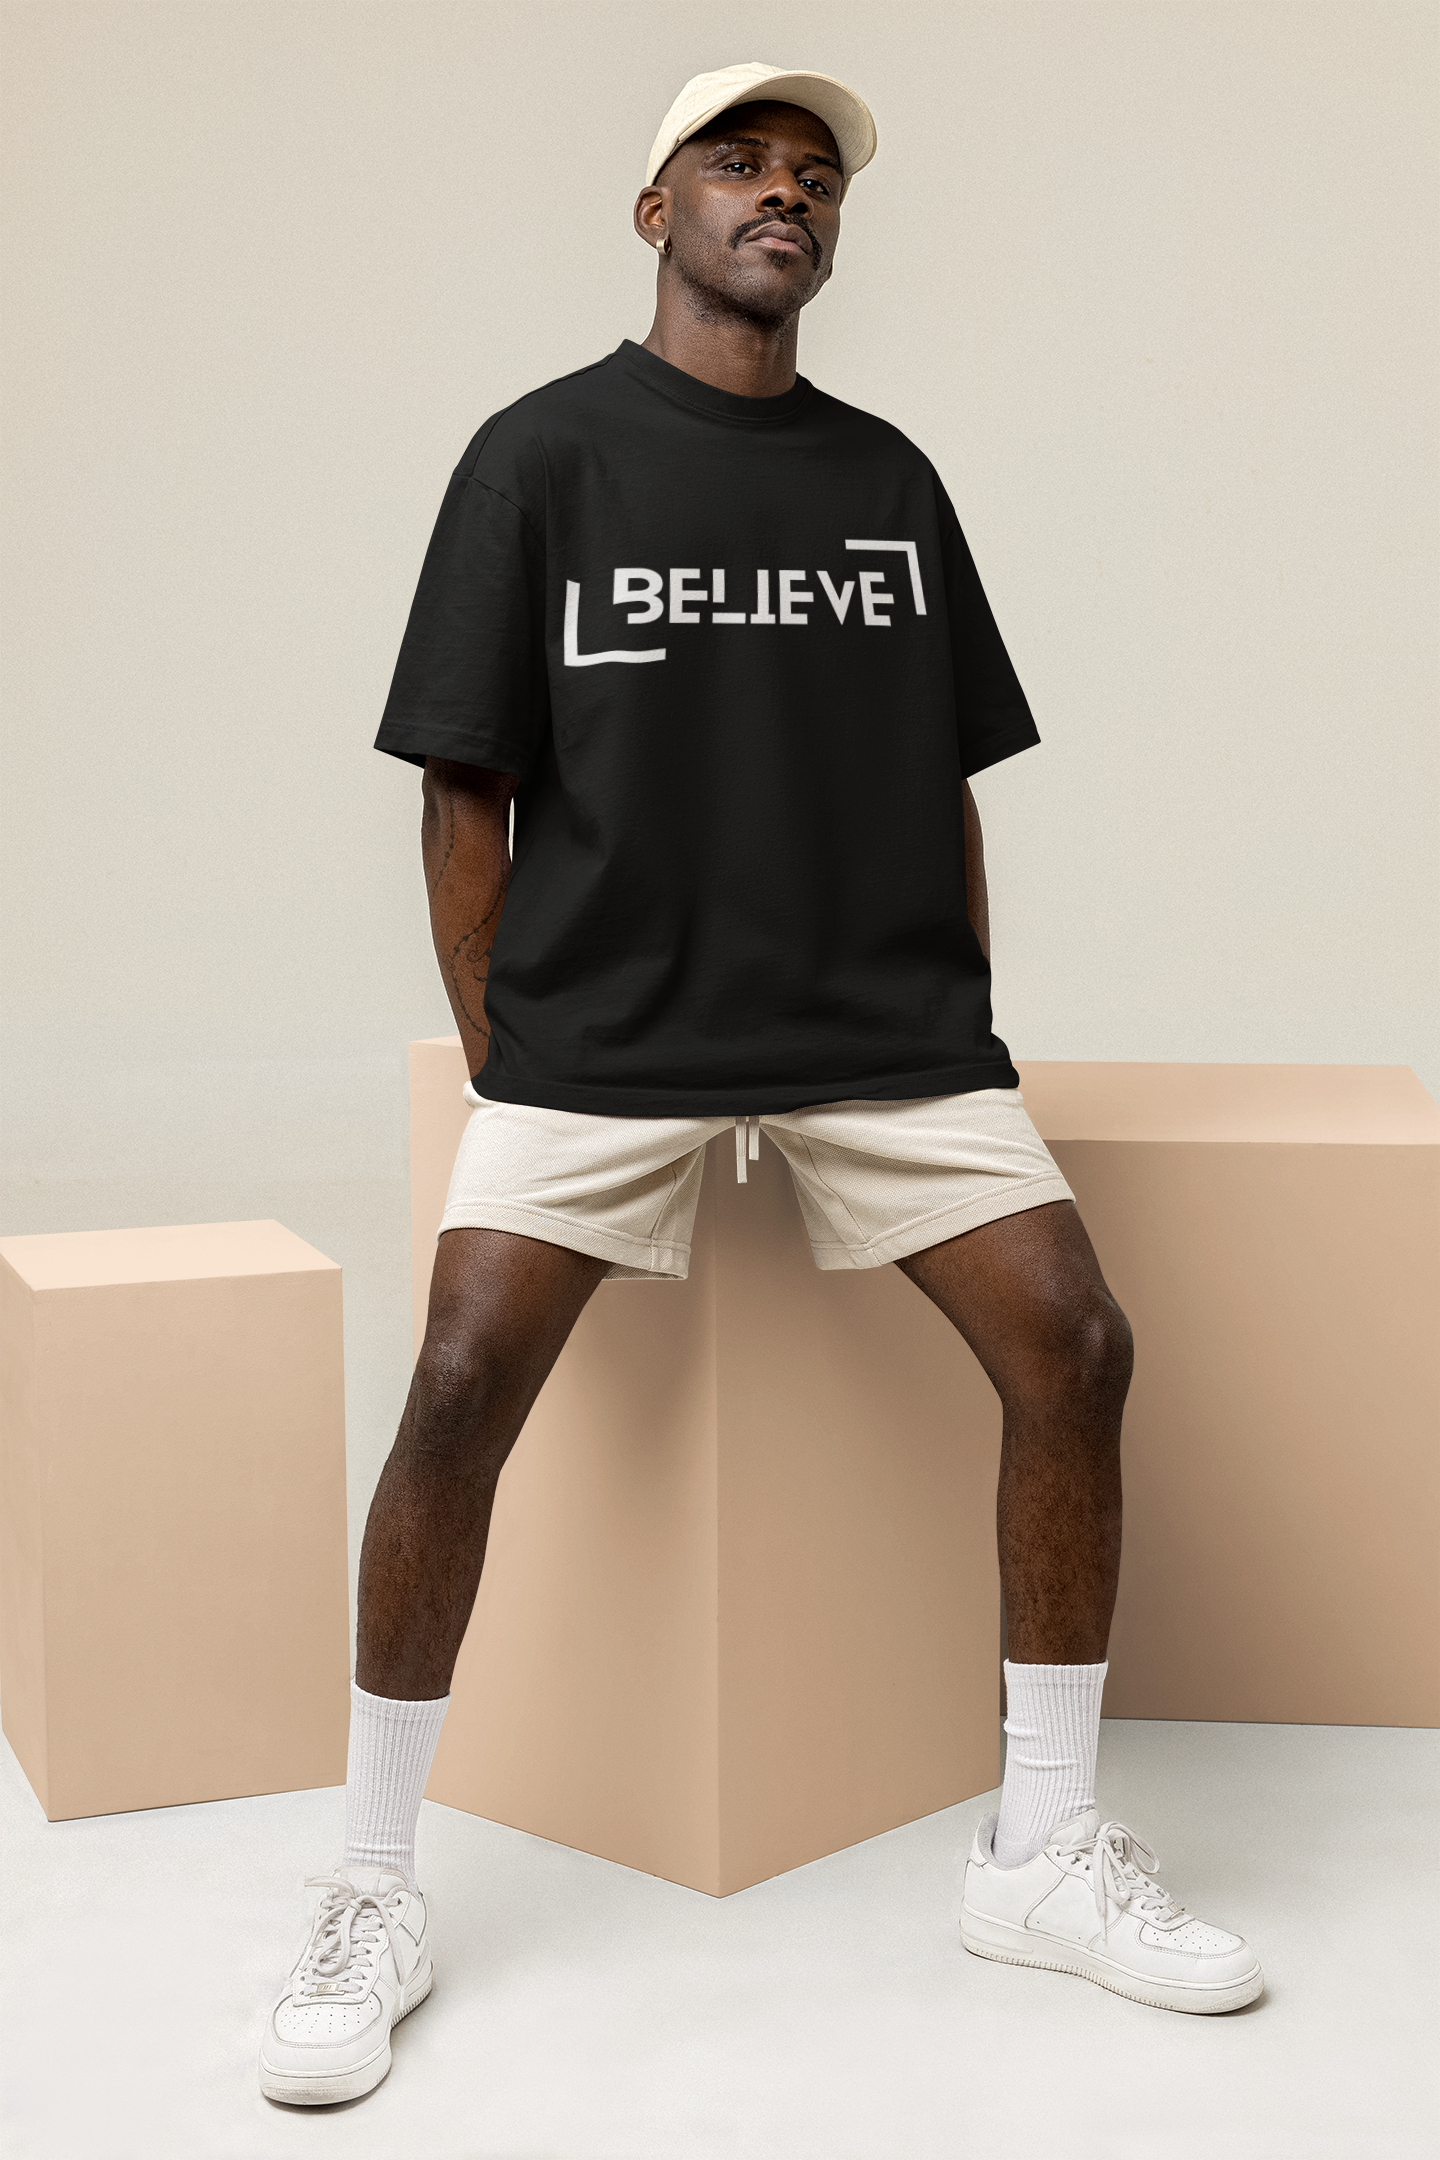 Believe Oversized Men's Round Neck Pure Cotton T-Shirt